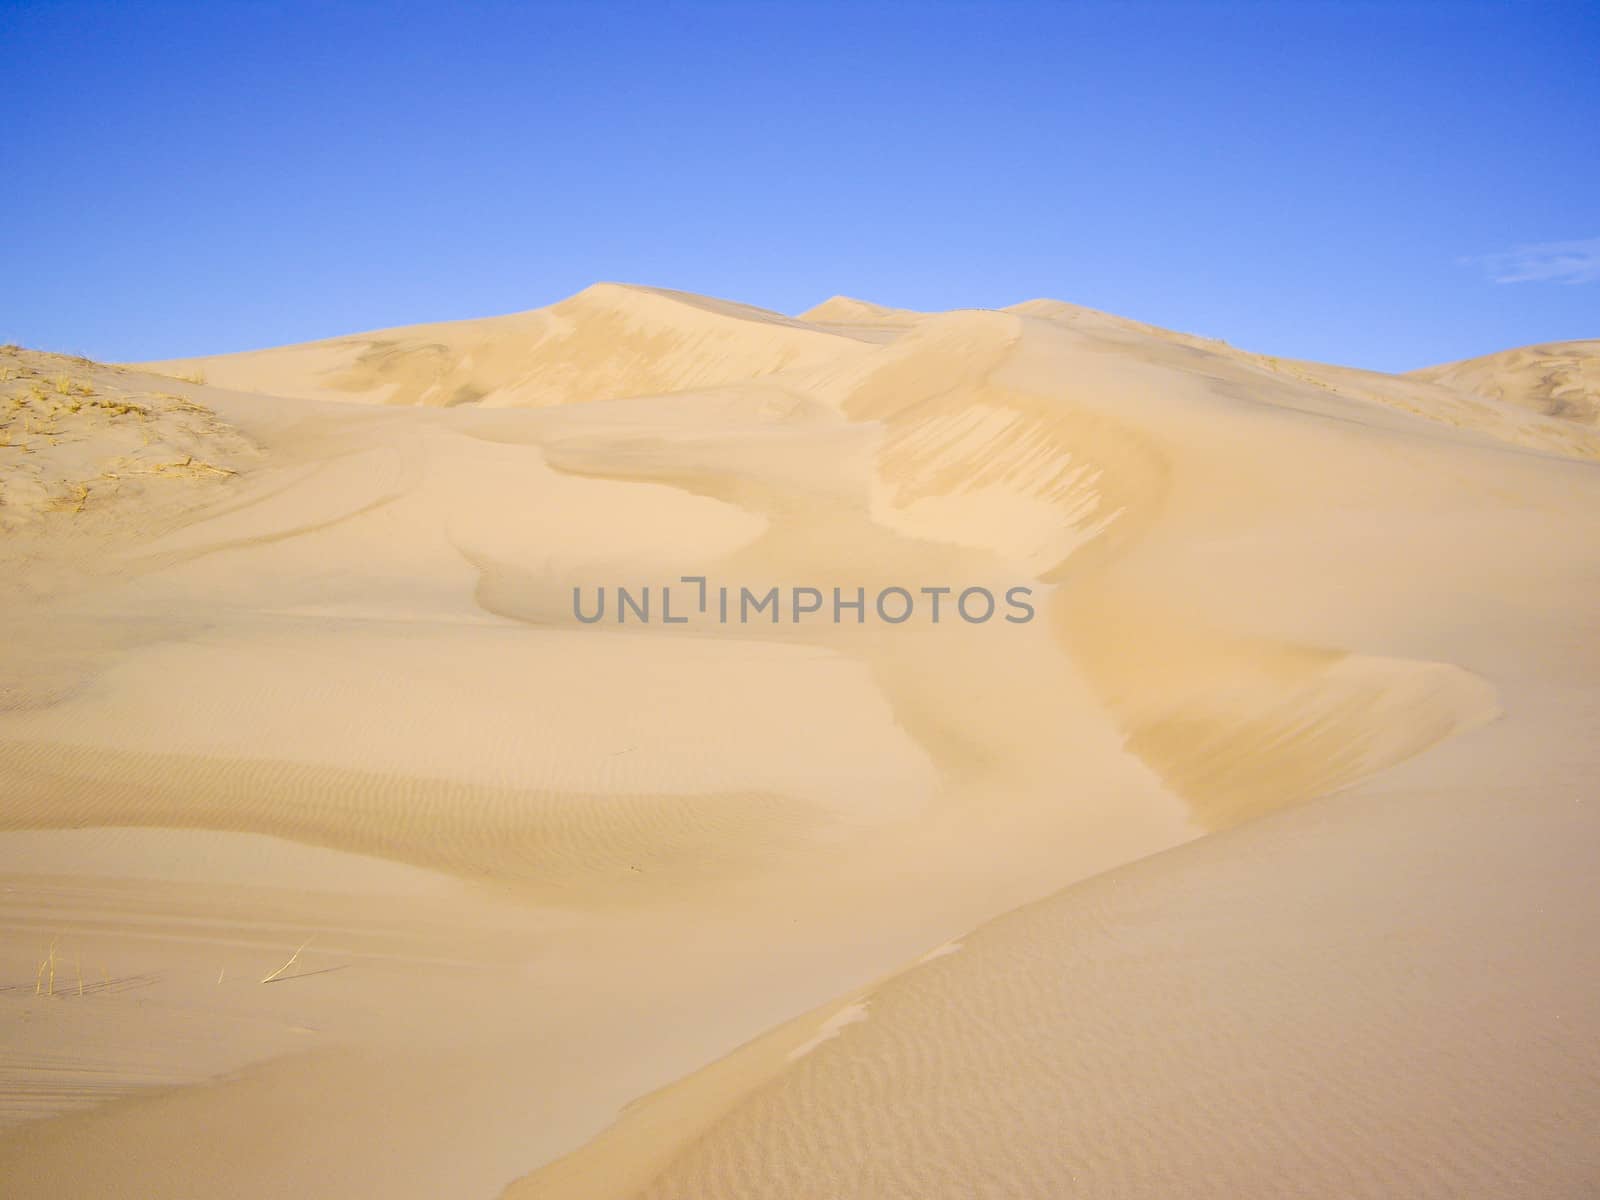 Wet sand dunes after the rain by emattil